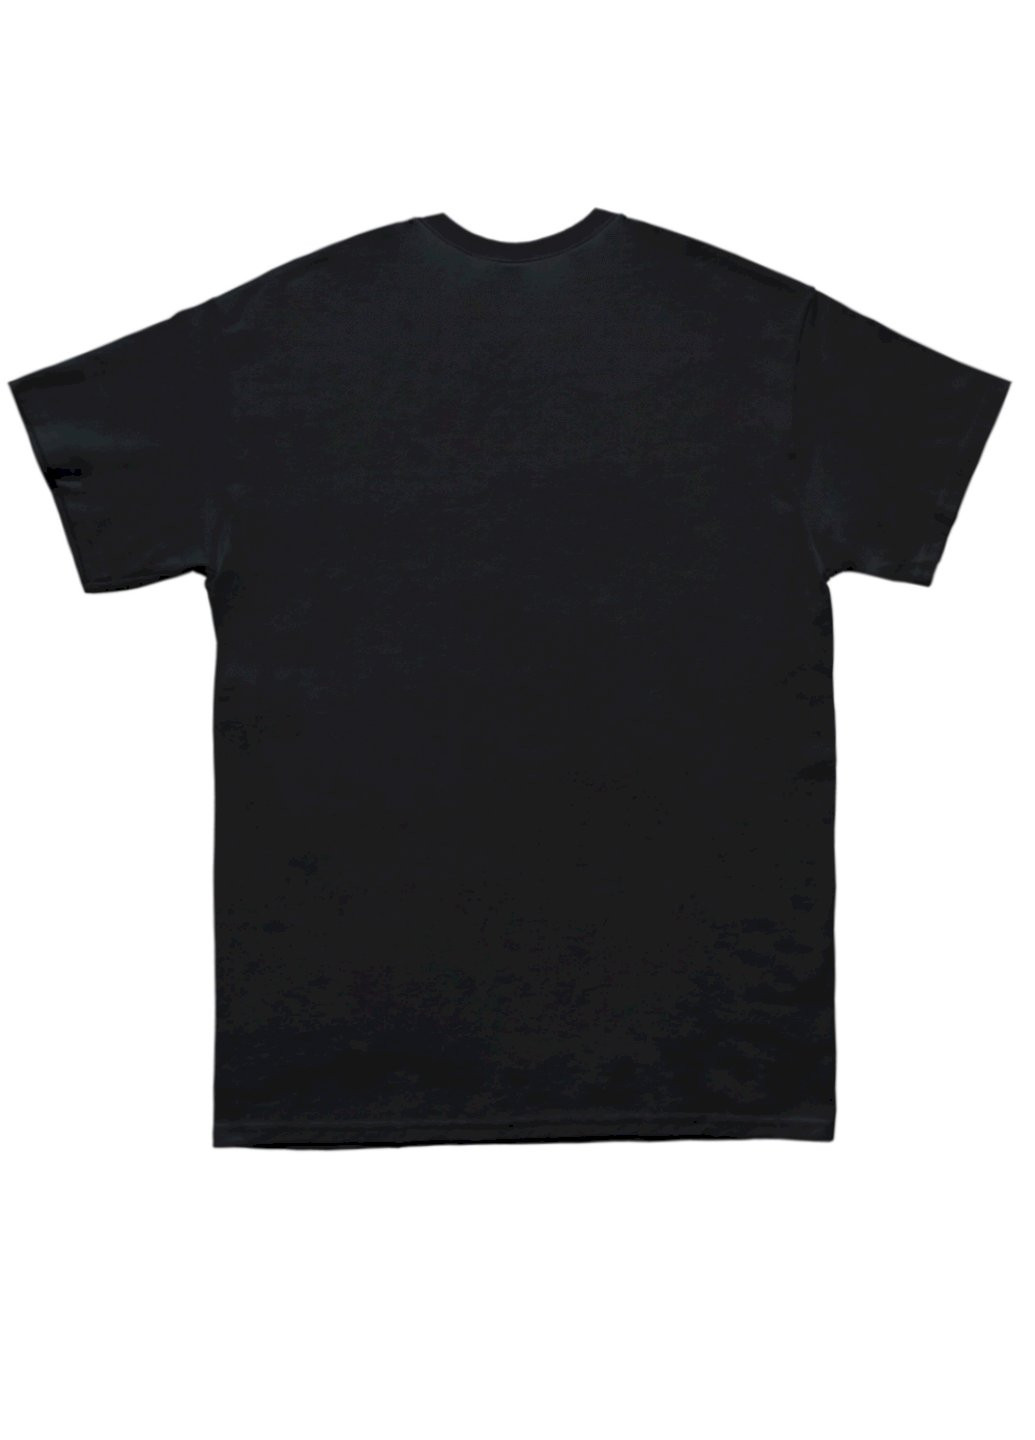 Черная футболка мужская черная "space market" Trace of Space